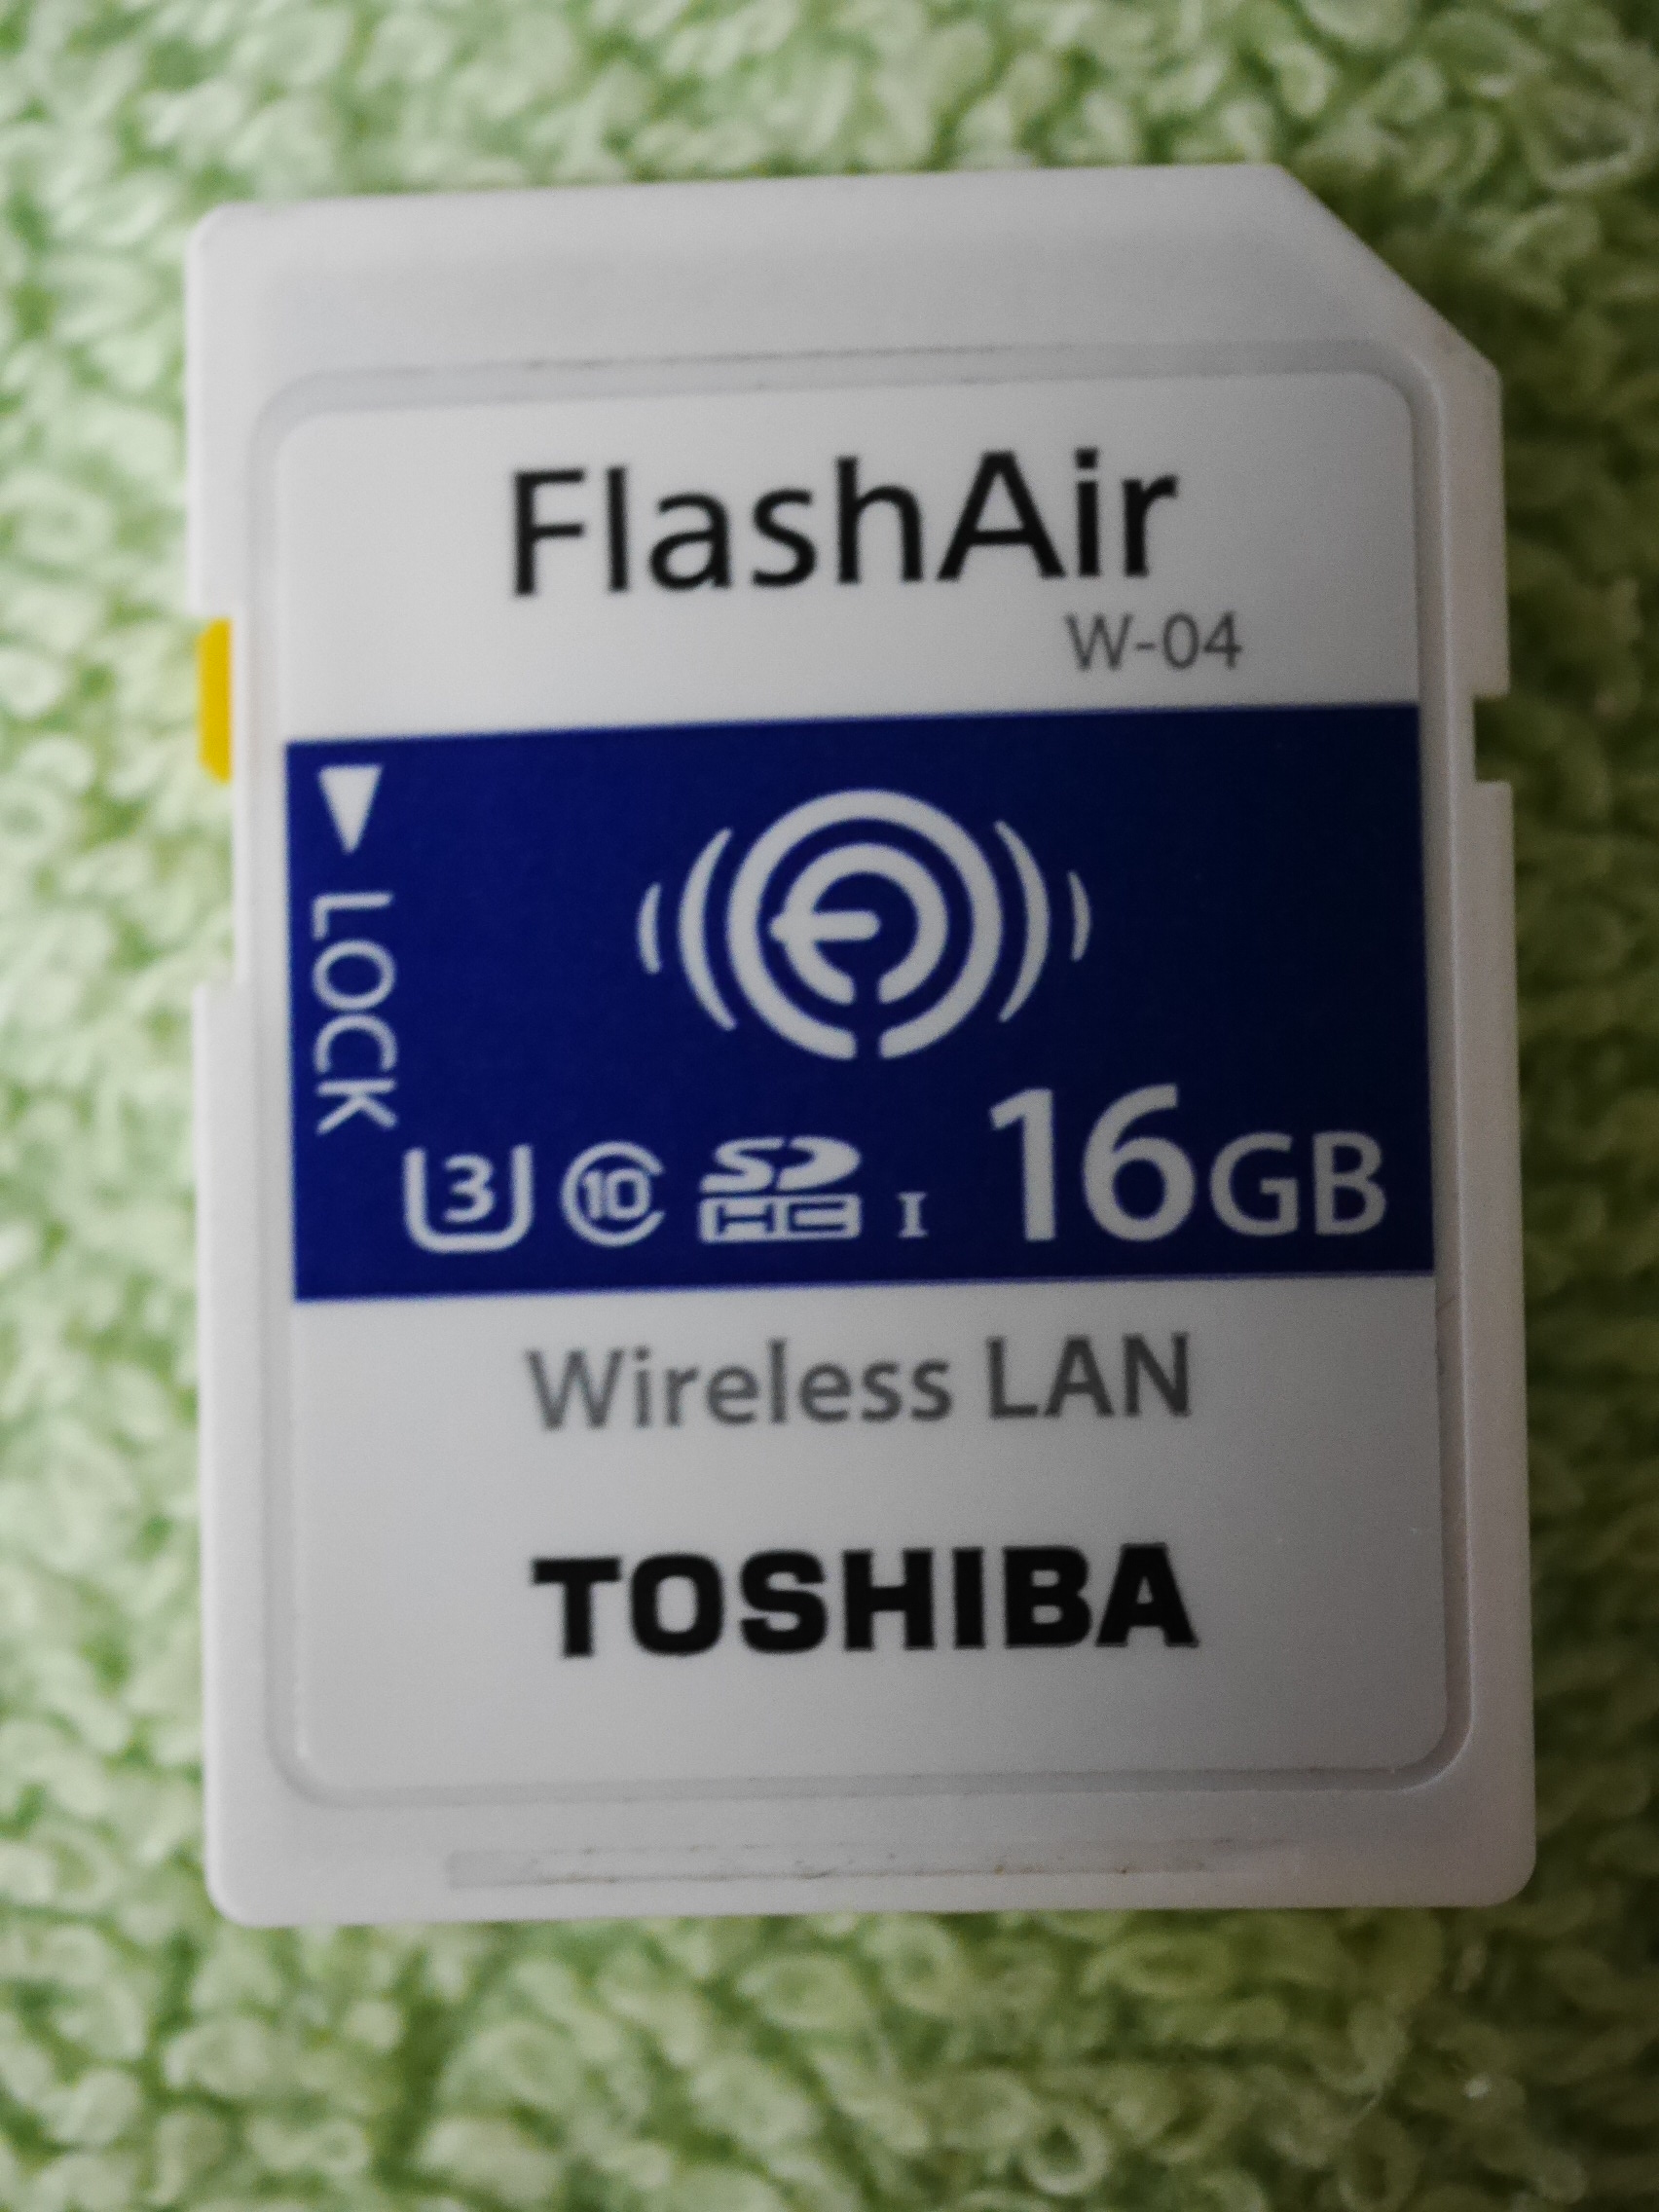 Toshiba FlashAir SD WIFI 16GB FlashAir™ W-04 (ความจุ 16GB